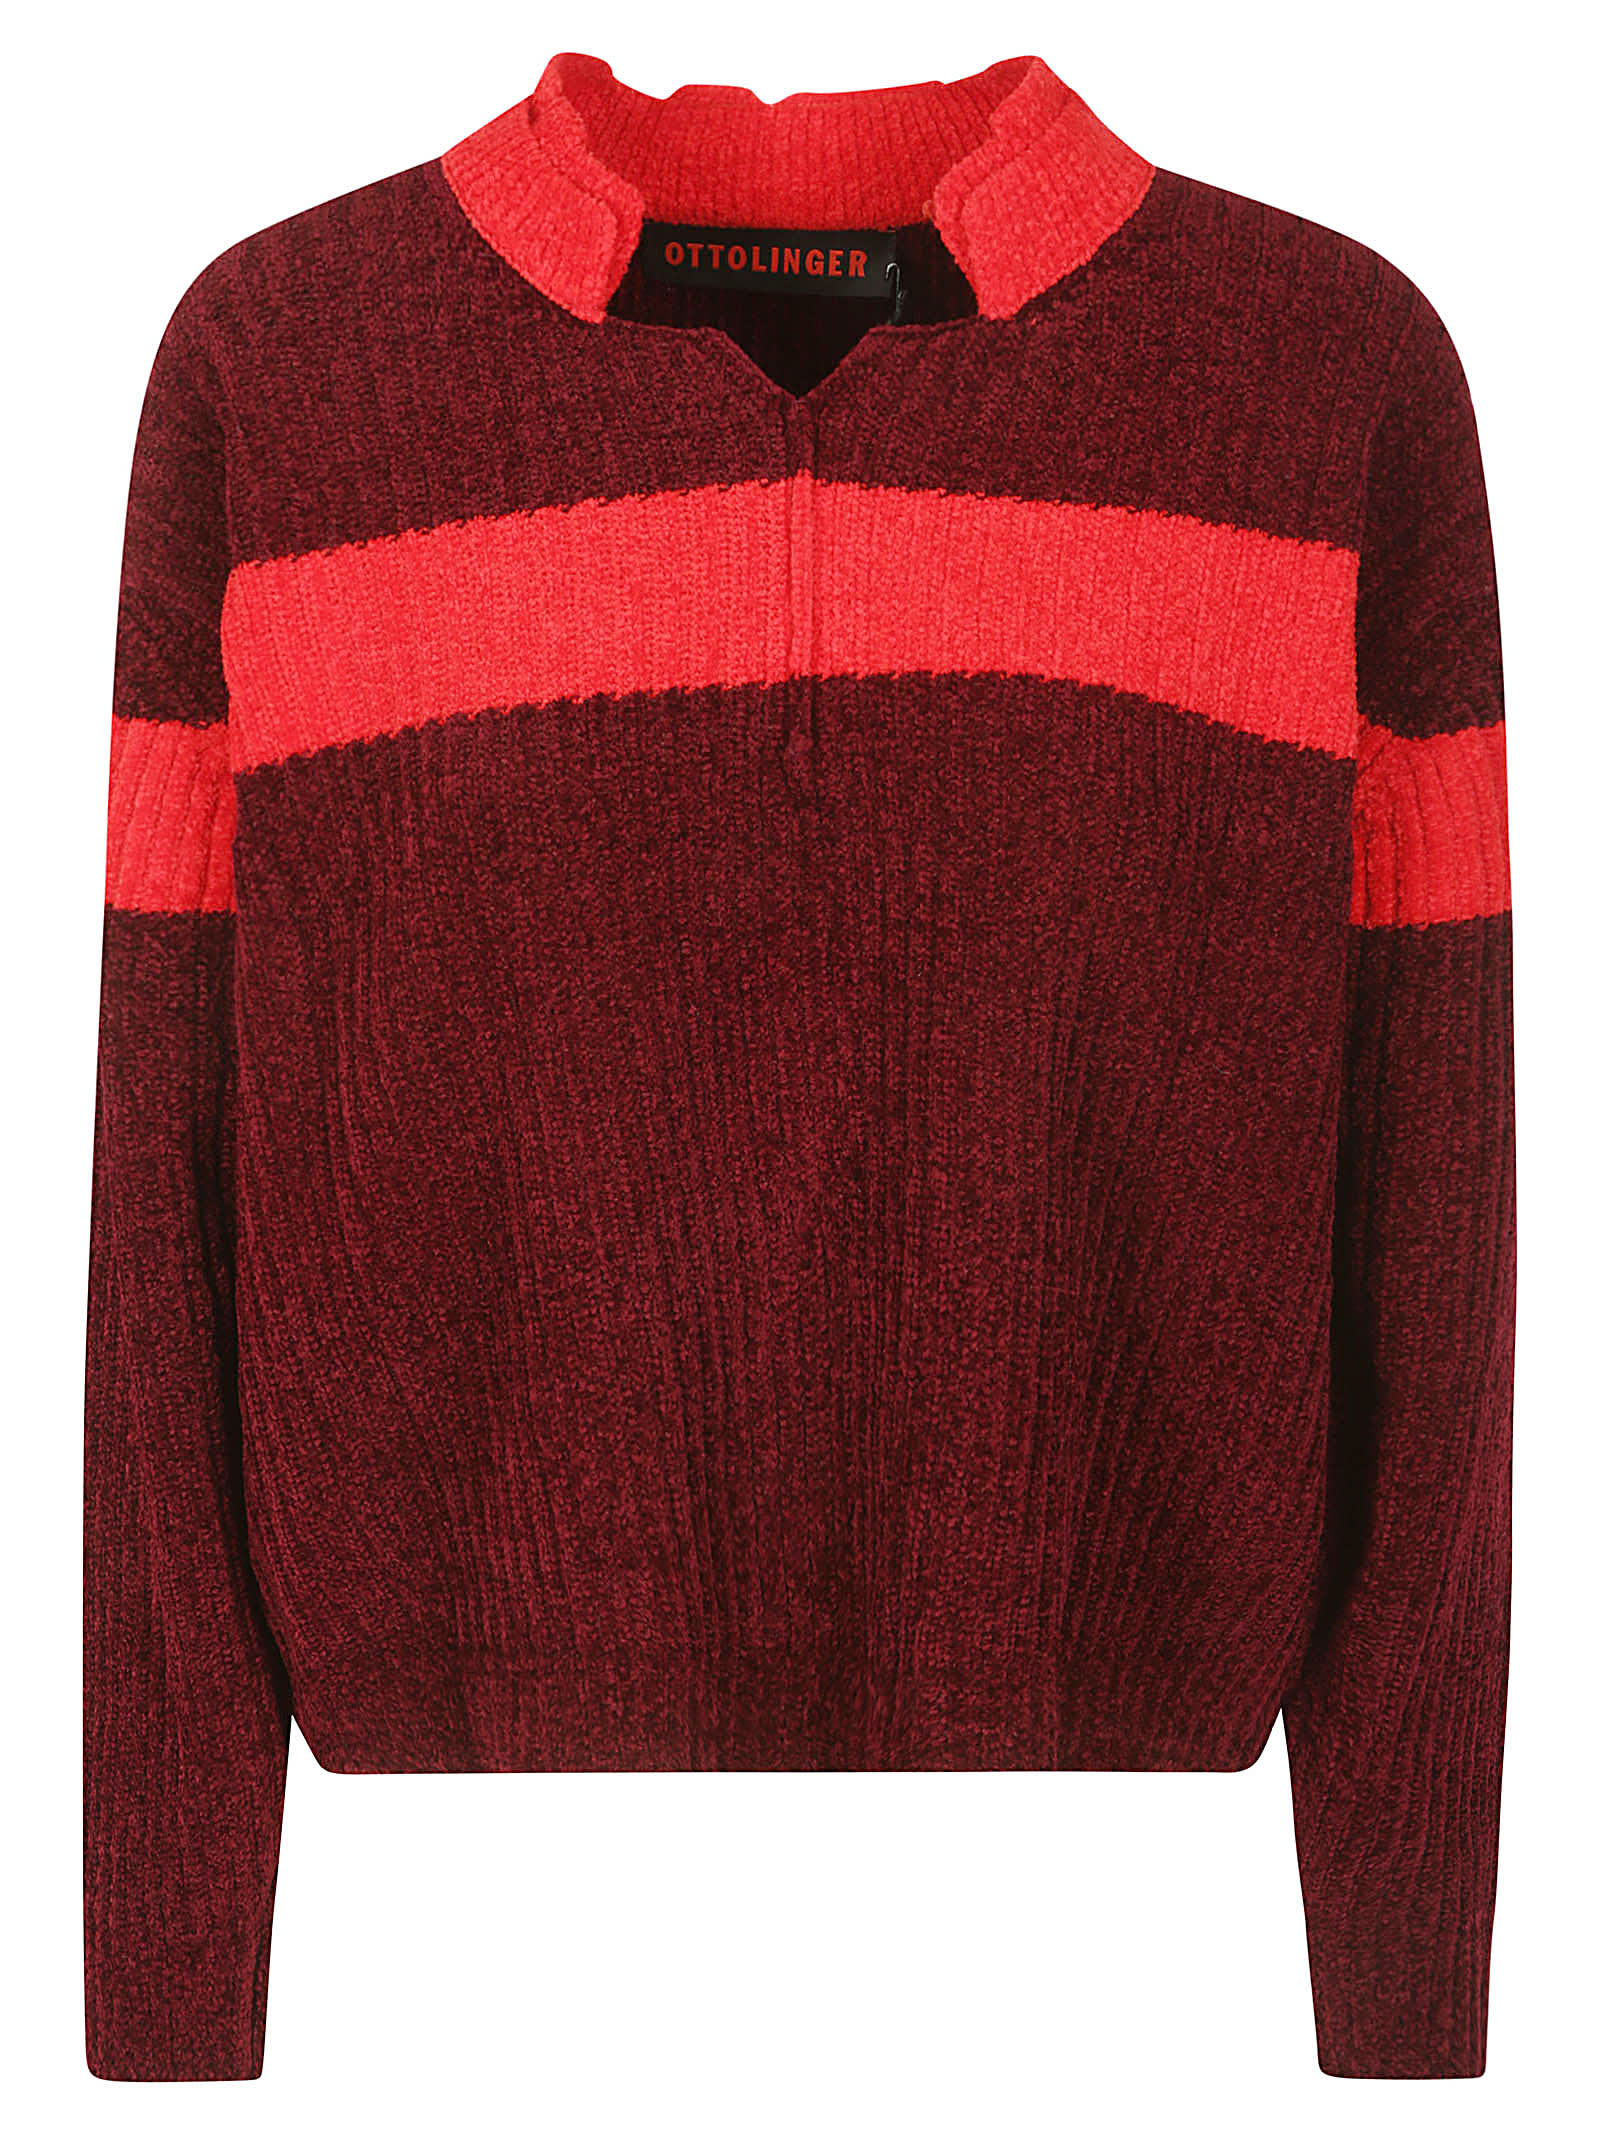 Ottolinger Stripe Knit Sweater